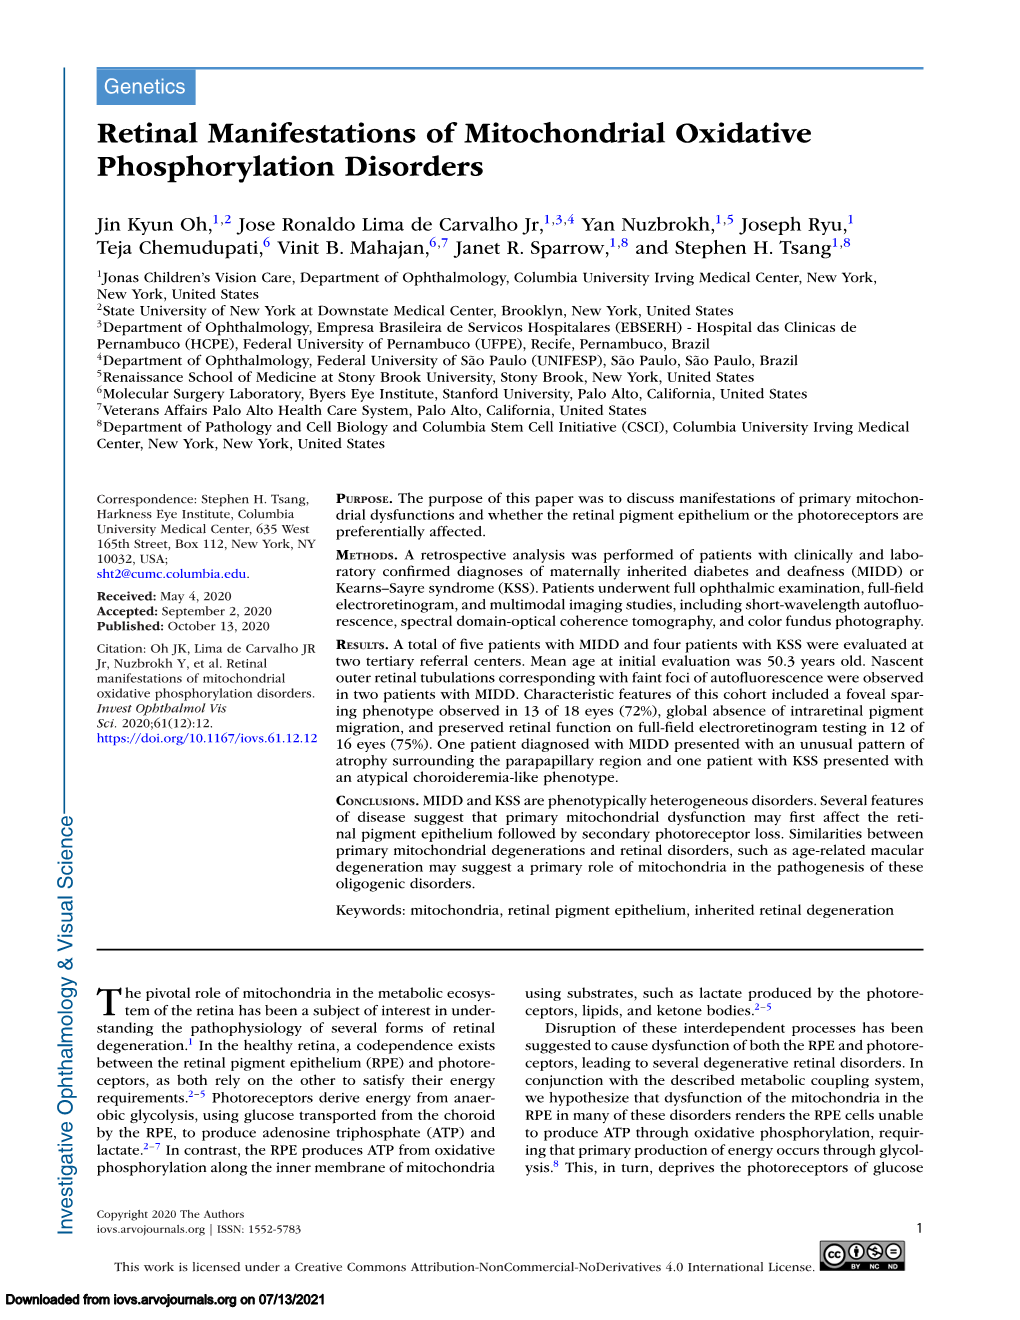 Retinal Manifestations of Mitochondrial Oxidative Phosphorylation Disorders